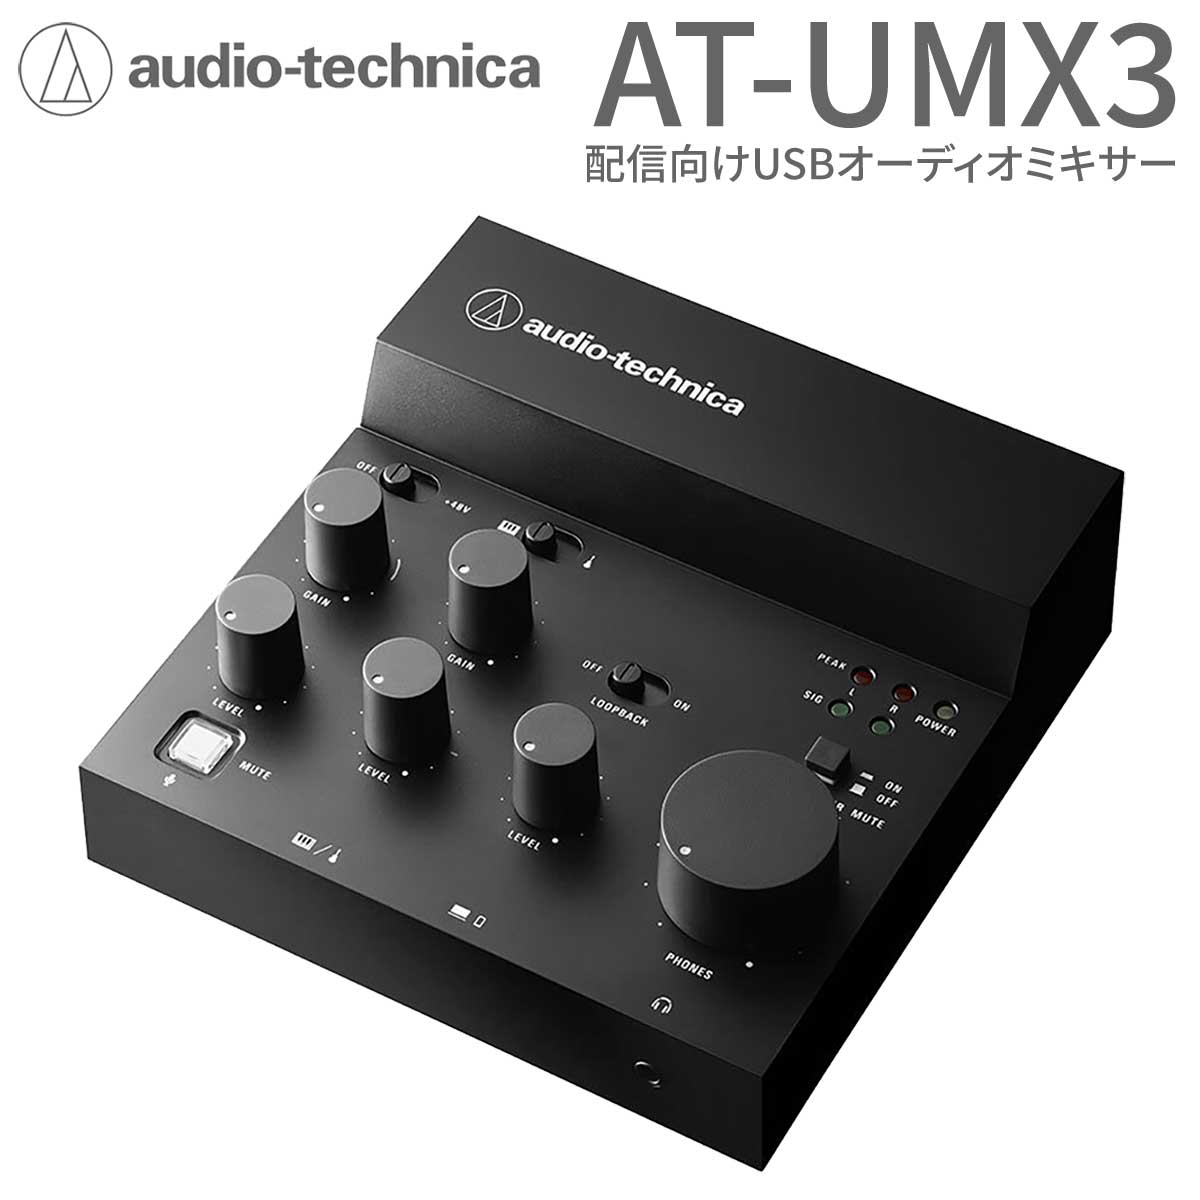 audio-technica AT-UMX3 USBオーディオミキサー オーディオ ...